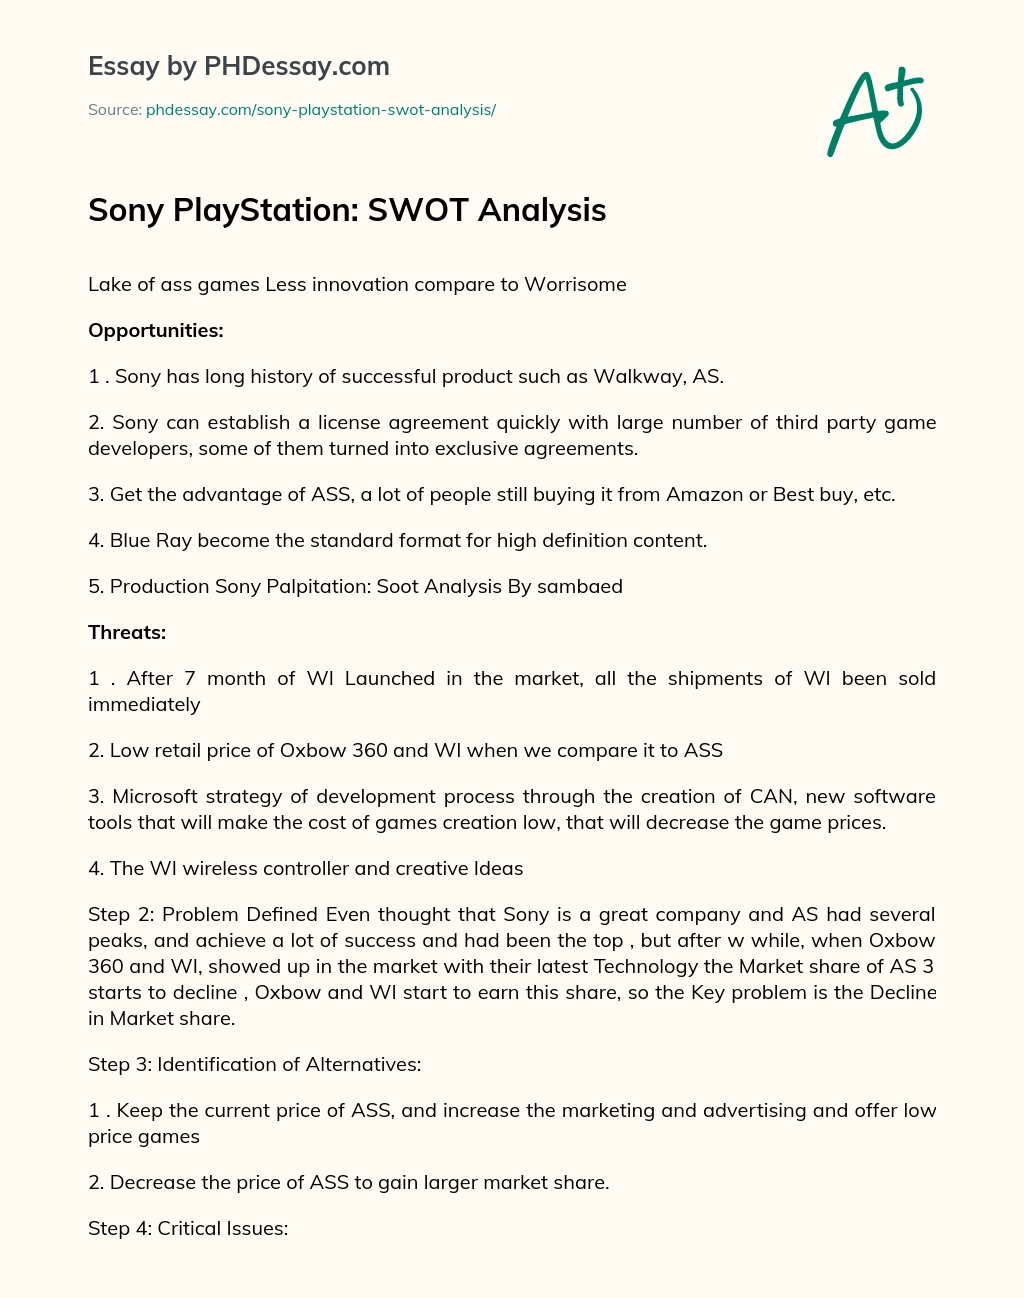 Sony PlayStation: SWOT Analysis essay